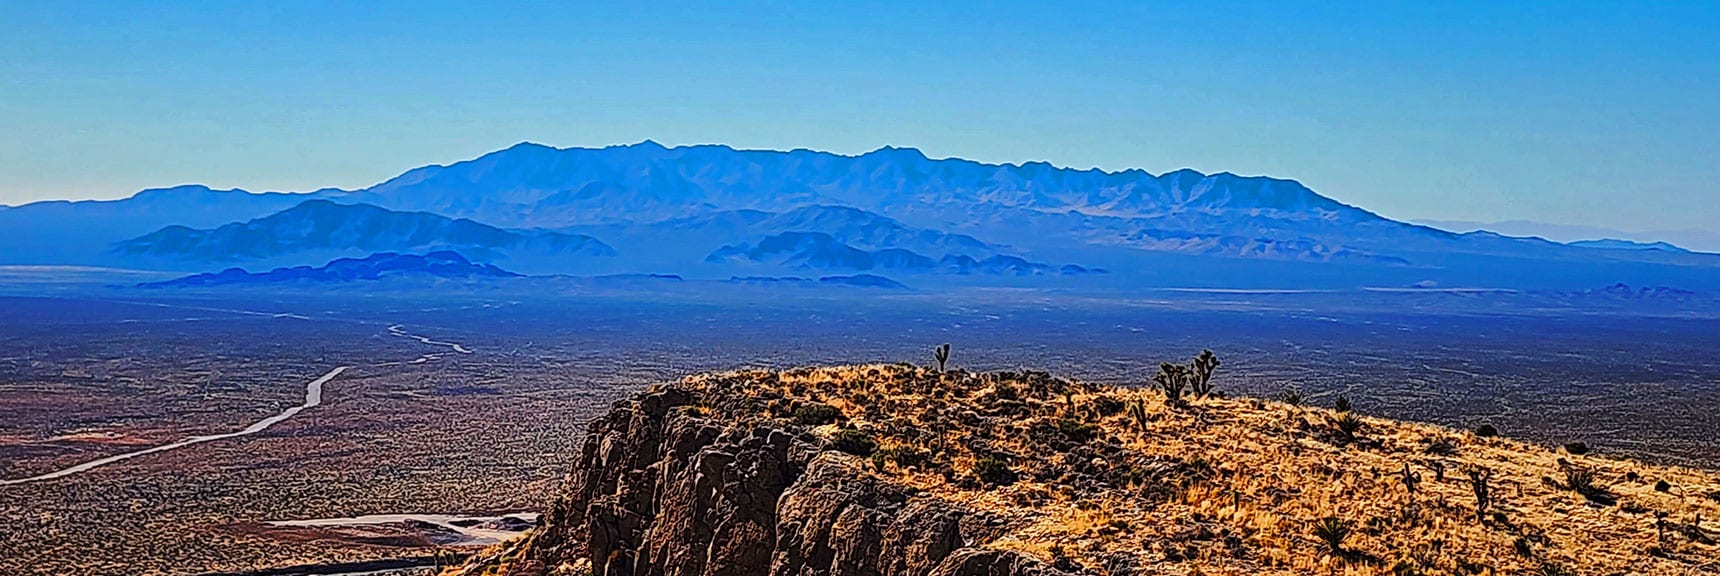 Larger View Over Summit Ledge Toward Nopah Range. | Landmark Bluff | Lovell Canyon, Nevada